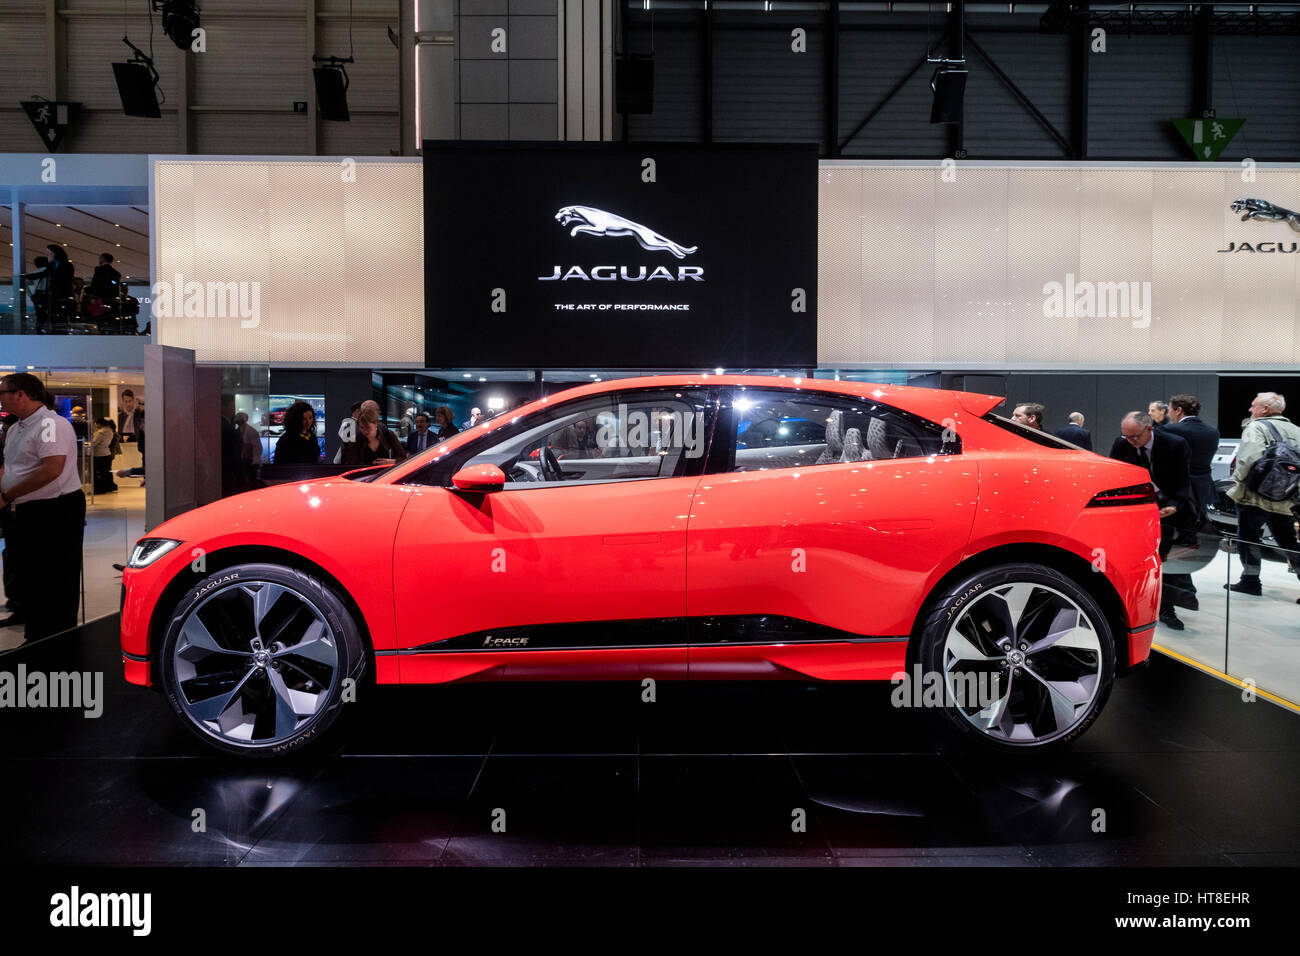 world-premiere-of-jaguar-ipace-electric-suv-concept-vehicle-at-geneva-HT8EHR.jpg